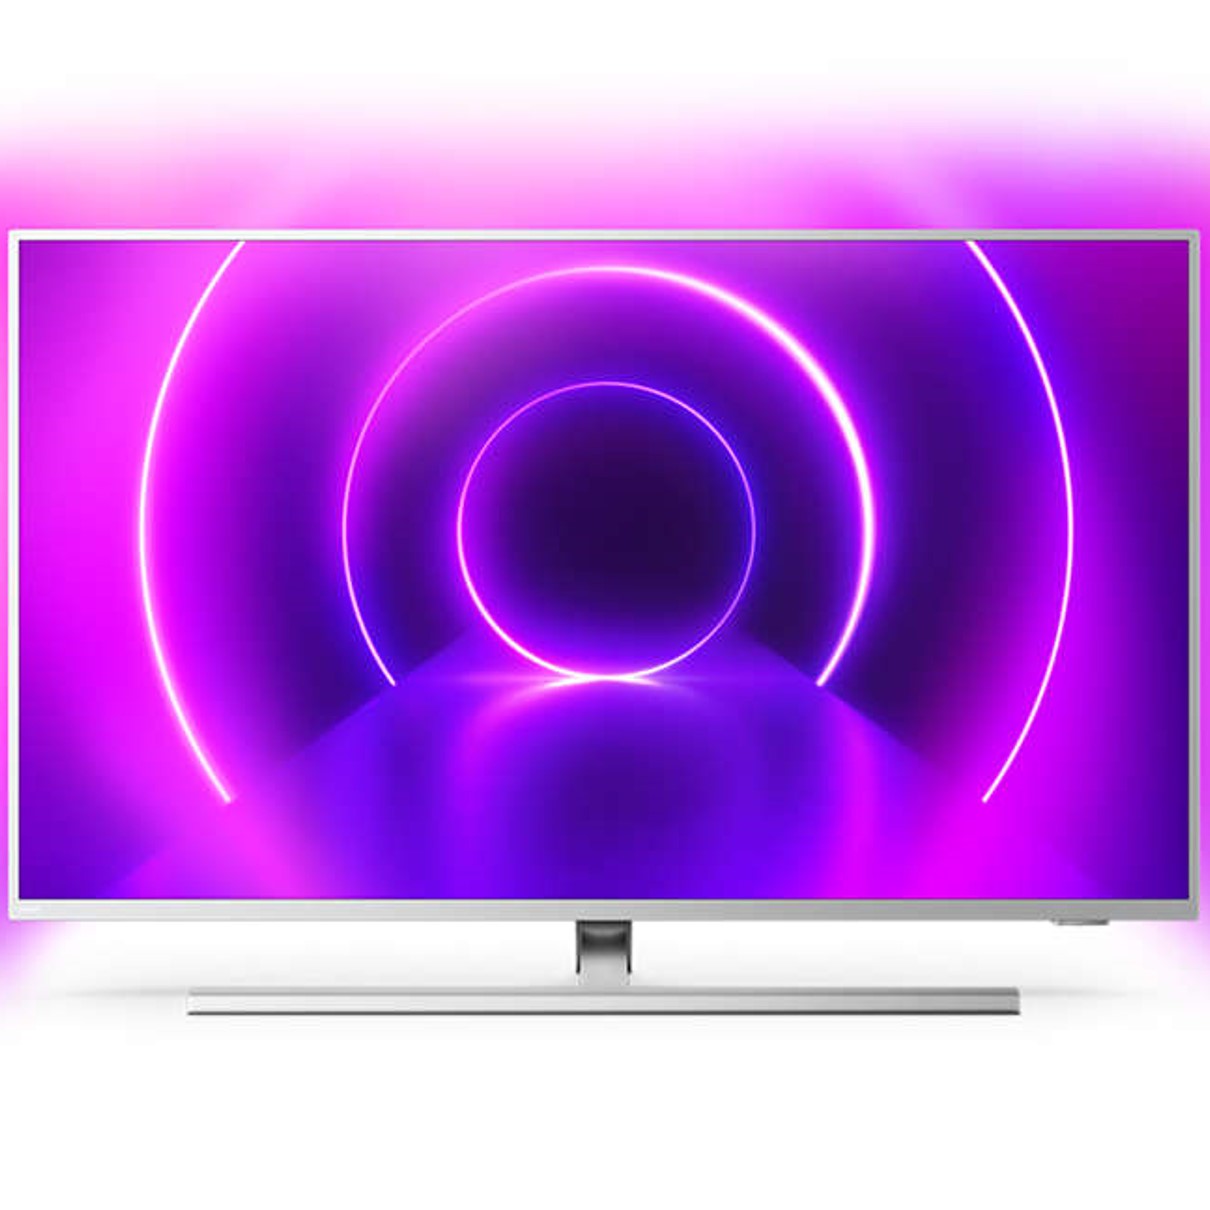 Tv philips 58pulgadas led 4k uhd -  gama 2020 -  58pus8535 -  ambilight -  hdr10+ -  android smart tv -  4 hdmi -  2 usb -  dvb - t - t2 - t2 - hd - c - s - s2 -  wifi